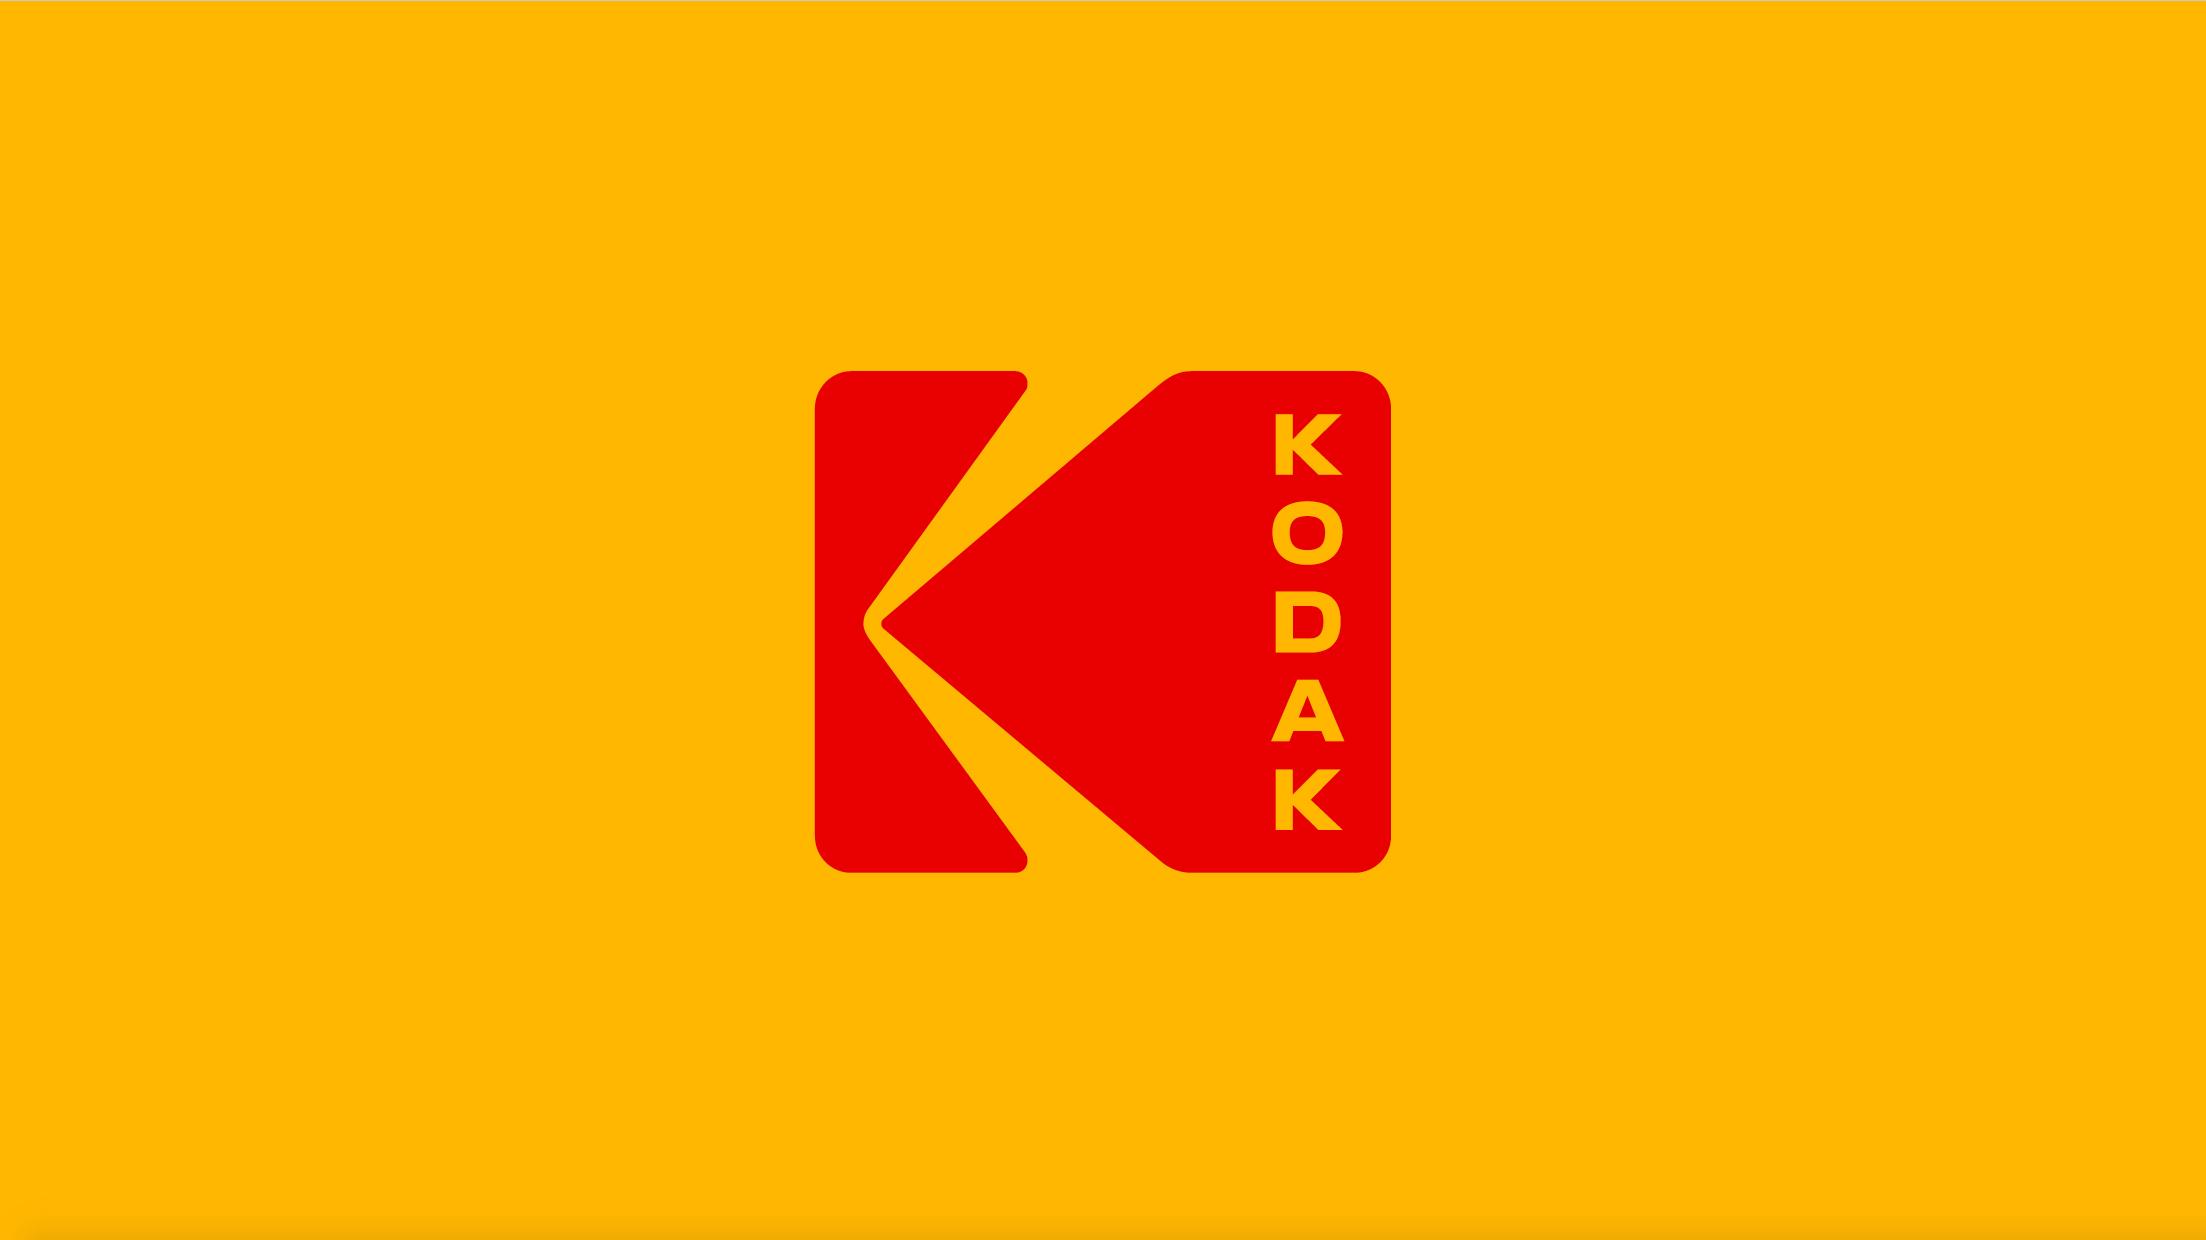 Big Red K Logo - Kodak brings back the big 'K' logo | Inquirer Technology